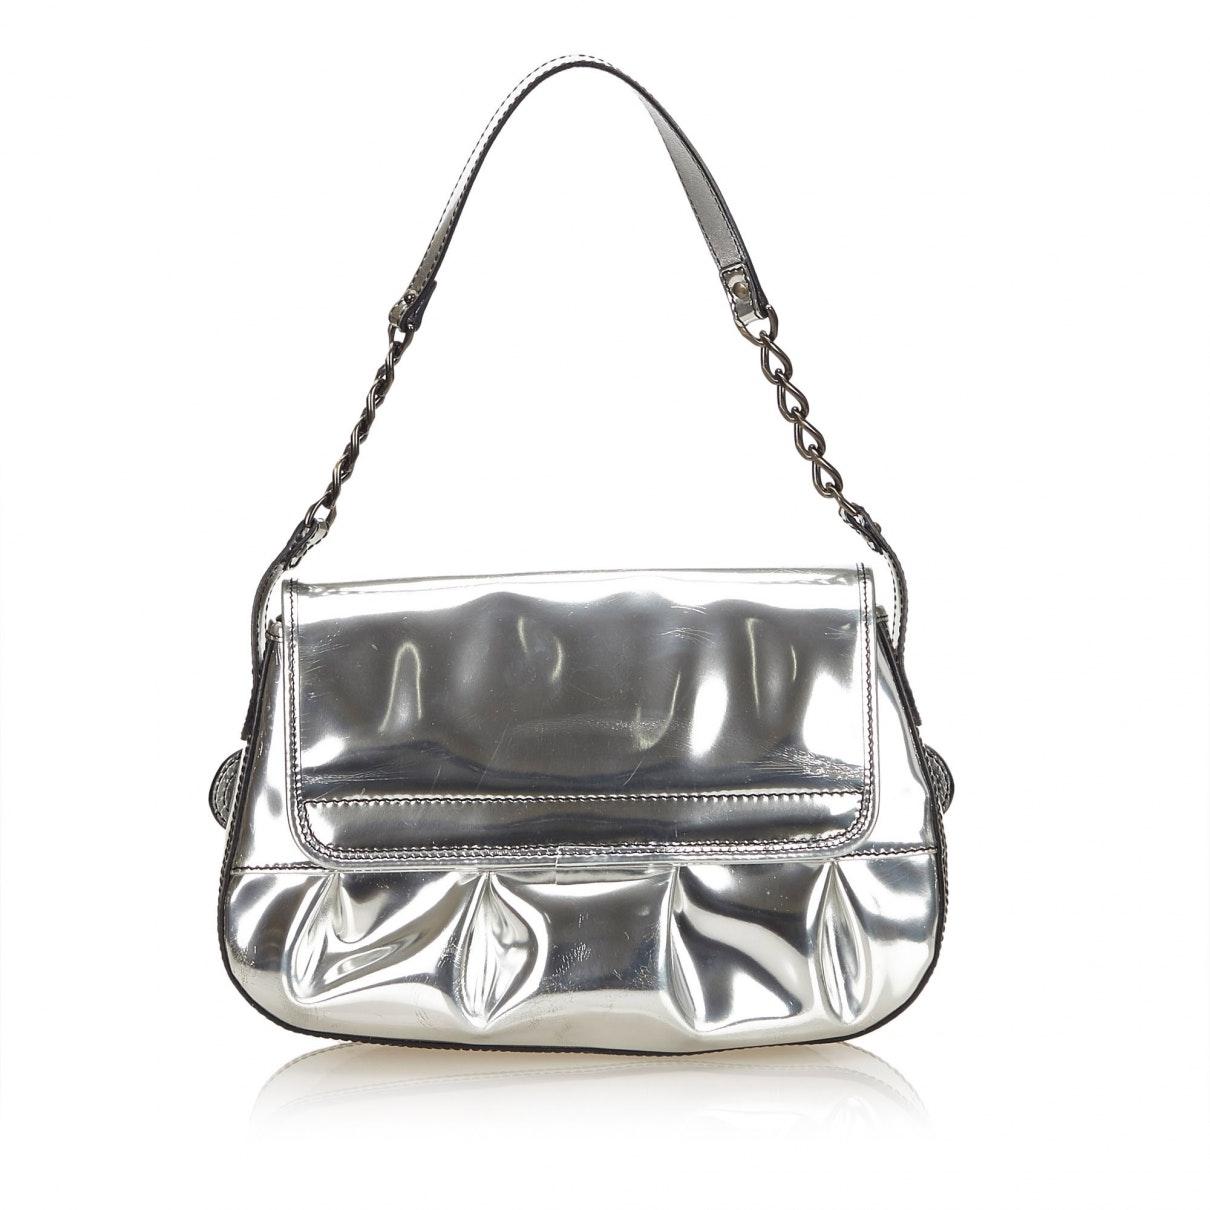 Fendi Baguette Silver Patent Leather Handbag in Metallic - Lyst